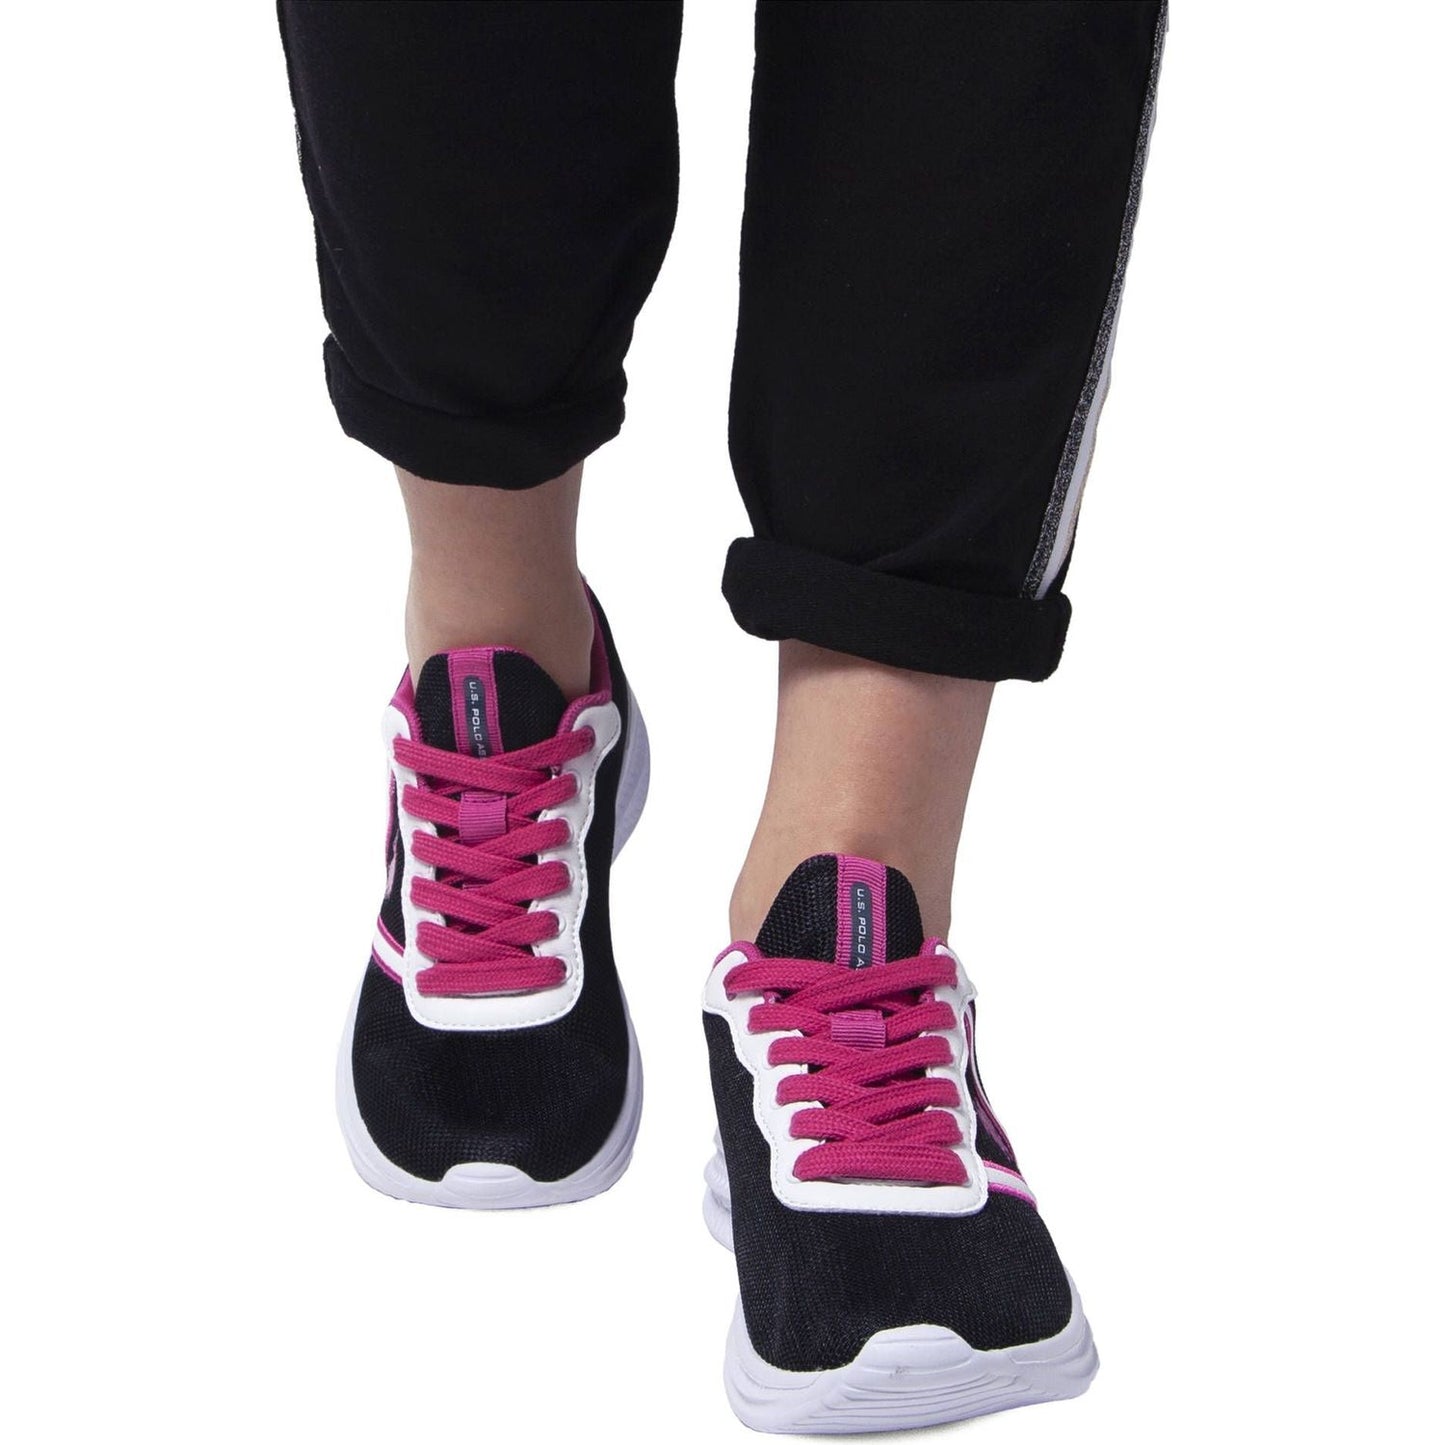 U.S. POLO ASSN.Chic Black Lace-Up Sports SneakersMcRichard Designer Brands£89.00